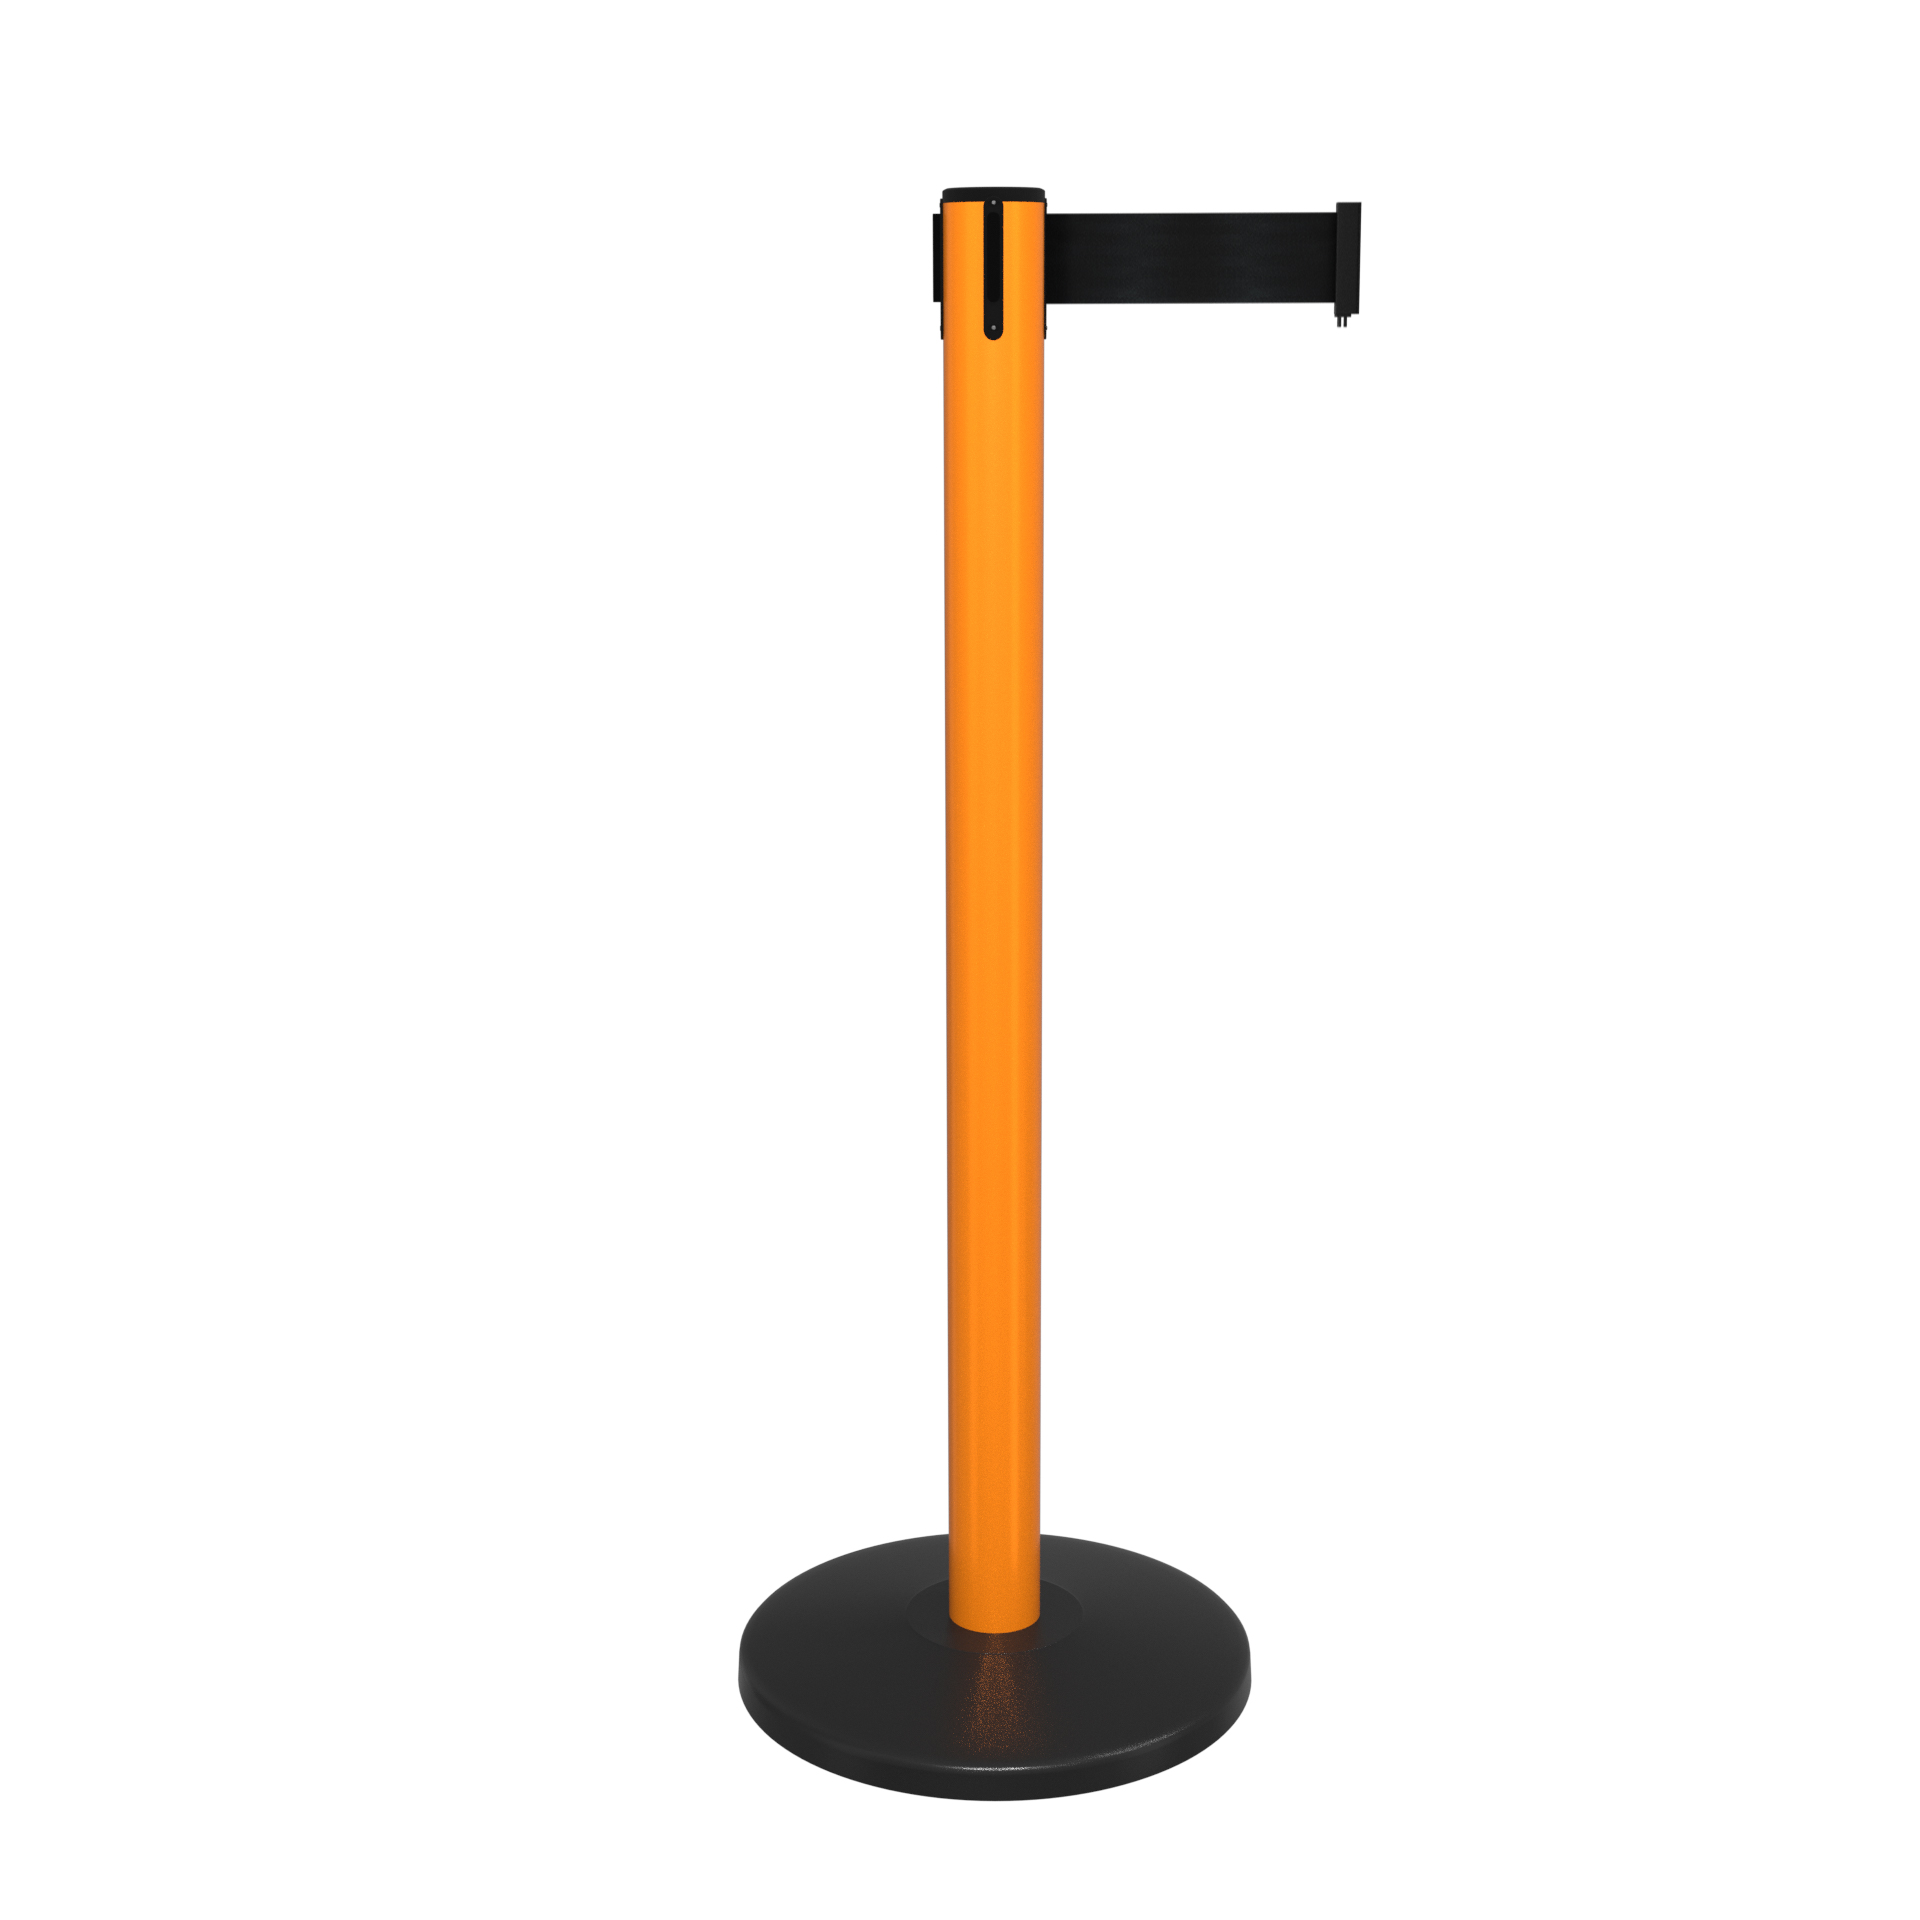 Orange SafetyMaster 450 Retractable Belt Barrier